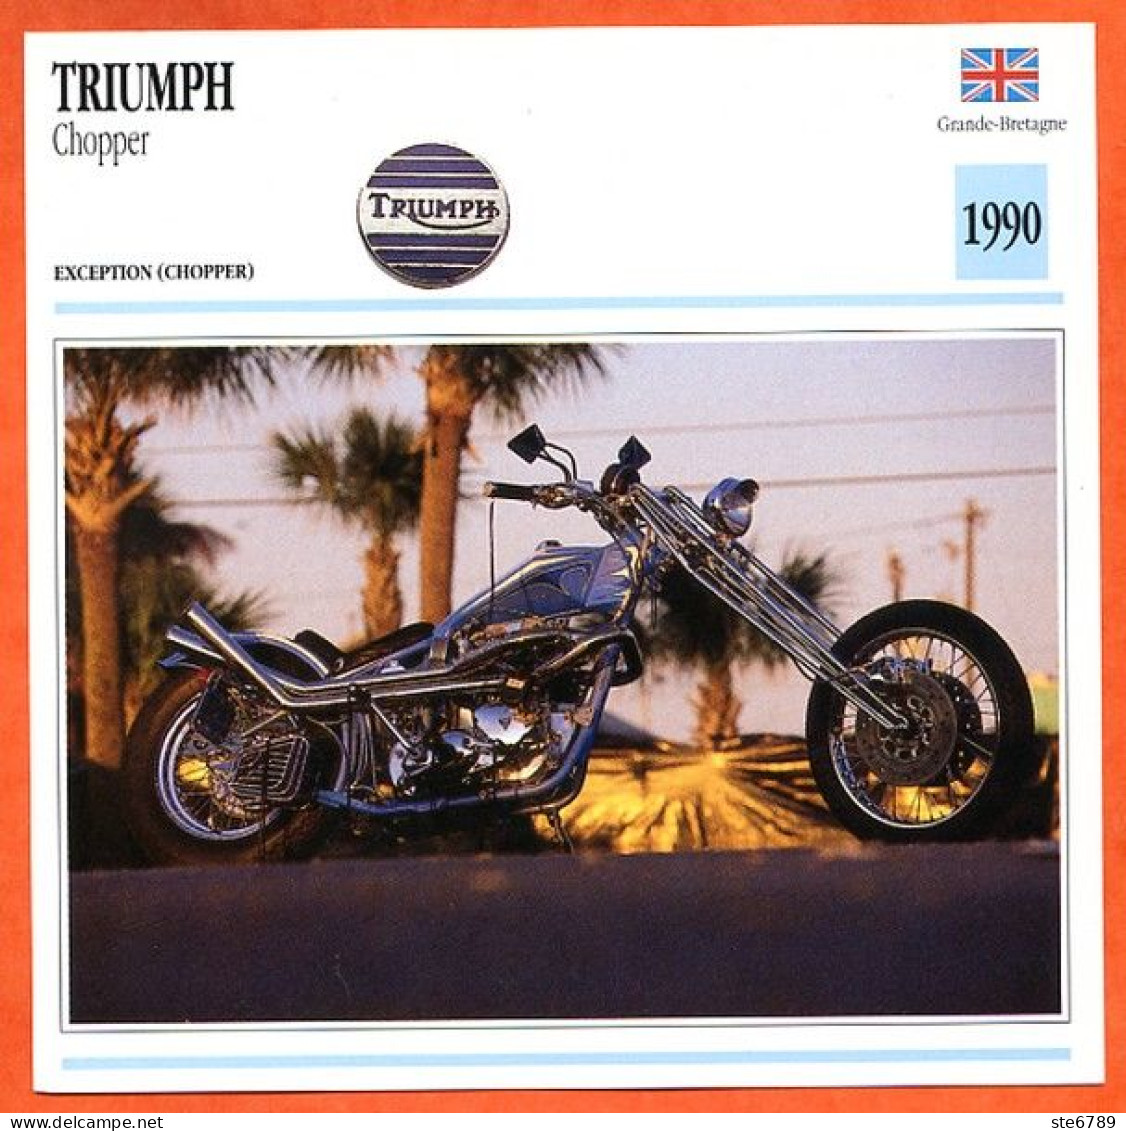 TRIUMPH Chopper 1990 UK Fiche Technique Moto - Sport